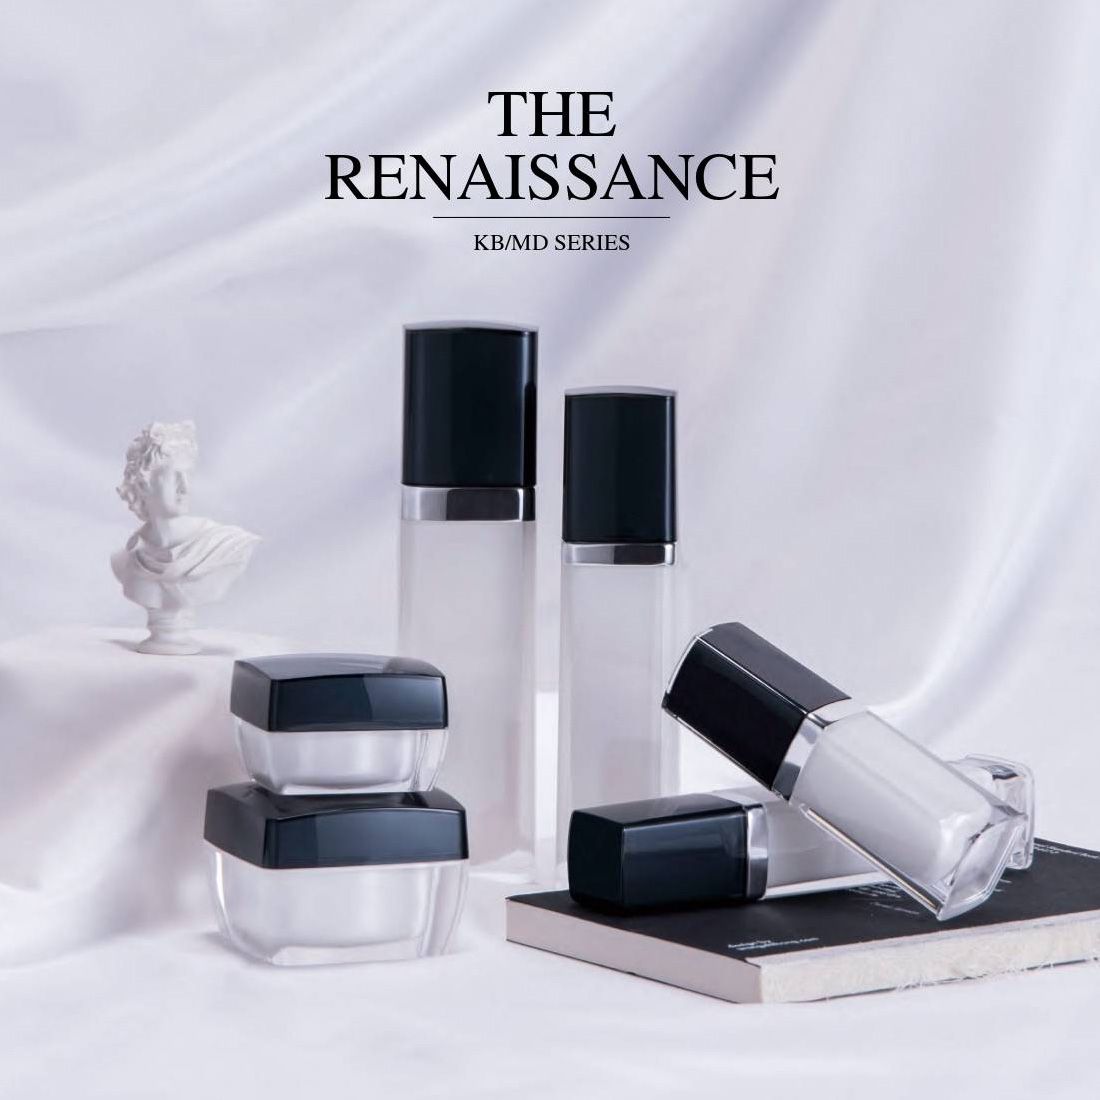 The Renaissance (บรรจุภัณฑ์เครื่องสำอางและผลิตภัณฑ์บำรุงผิว Square Acrylic Luxury) ซีรี่ส์ KB / MD